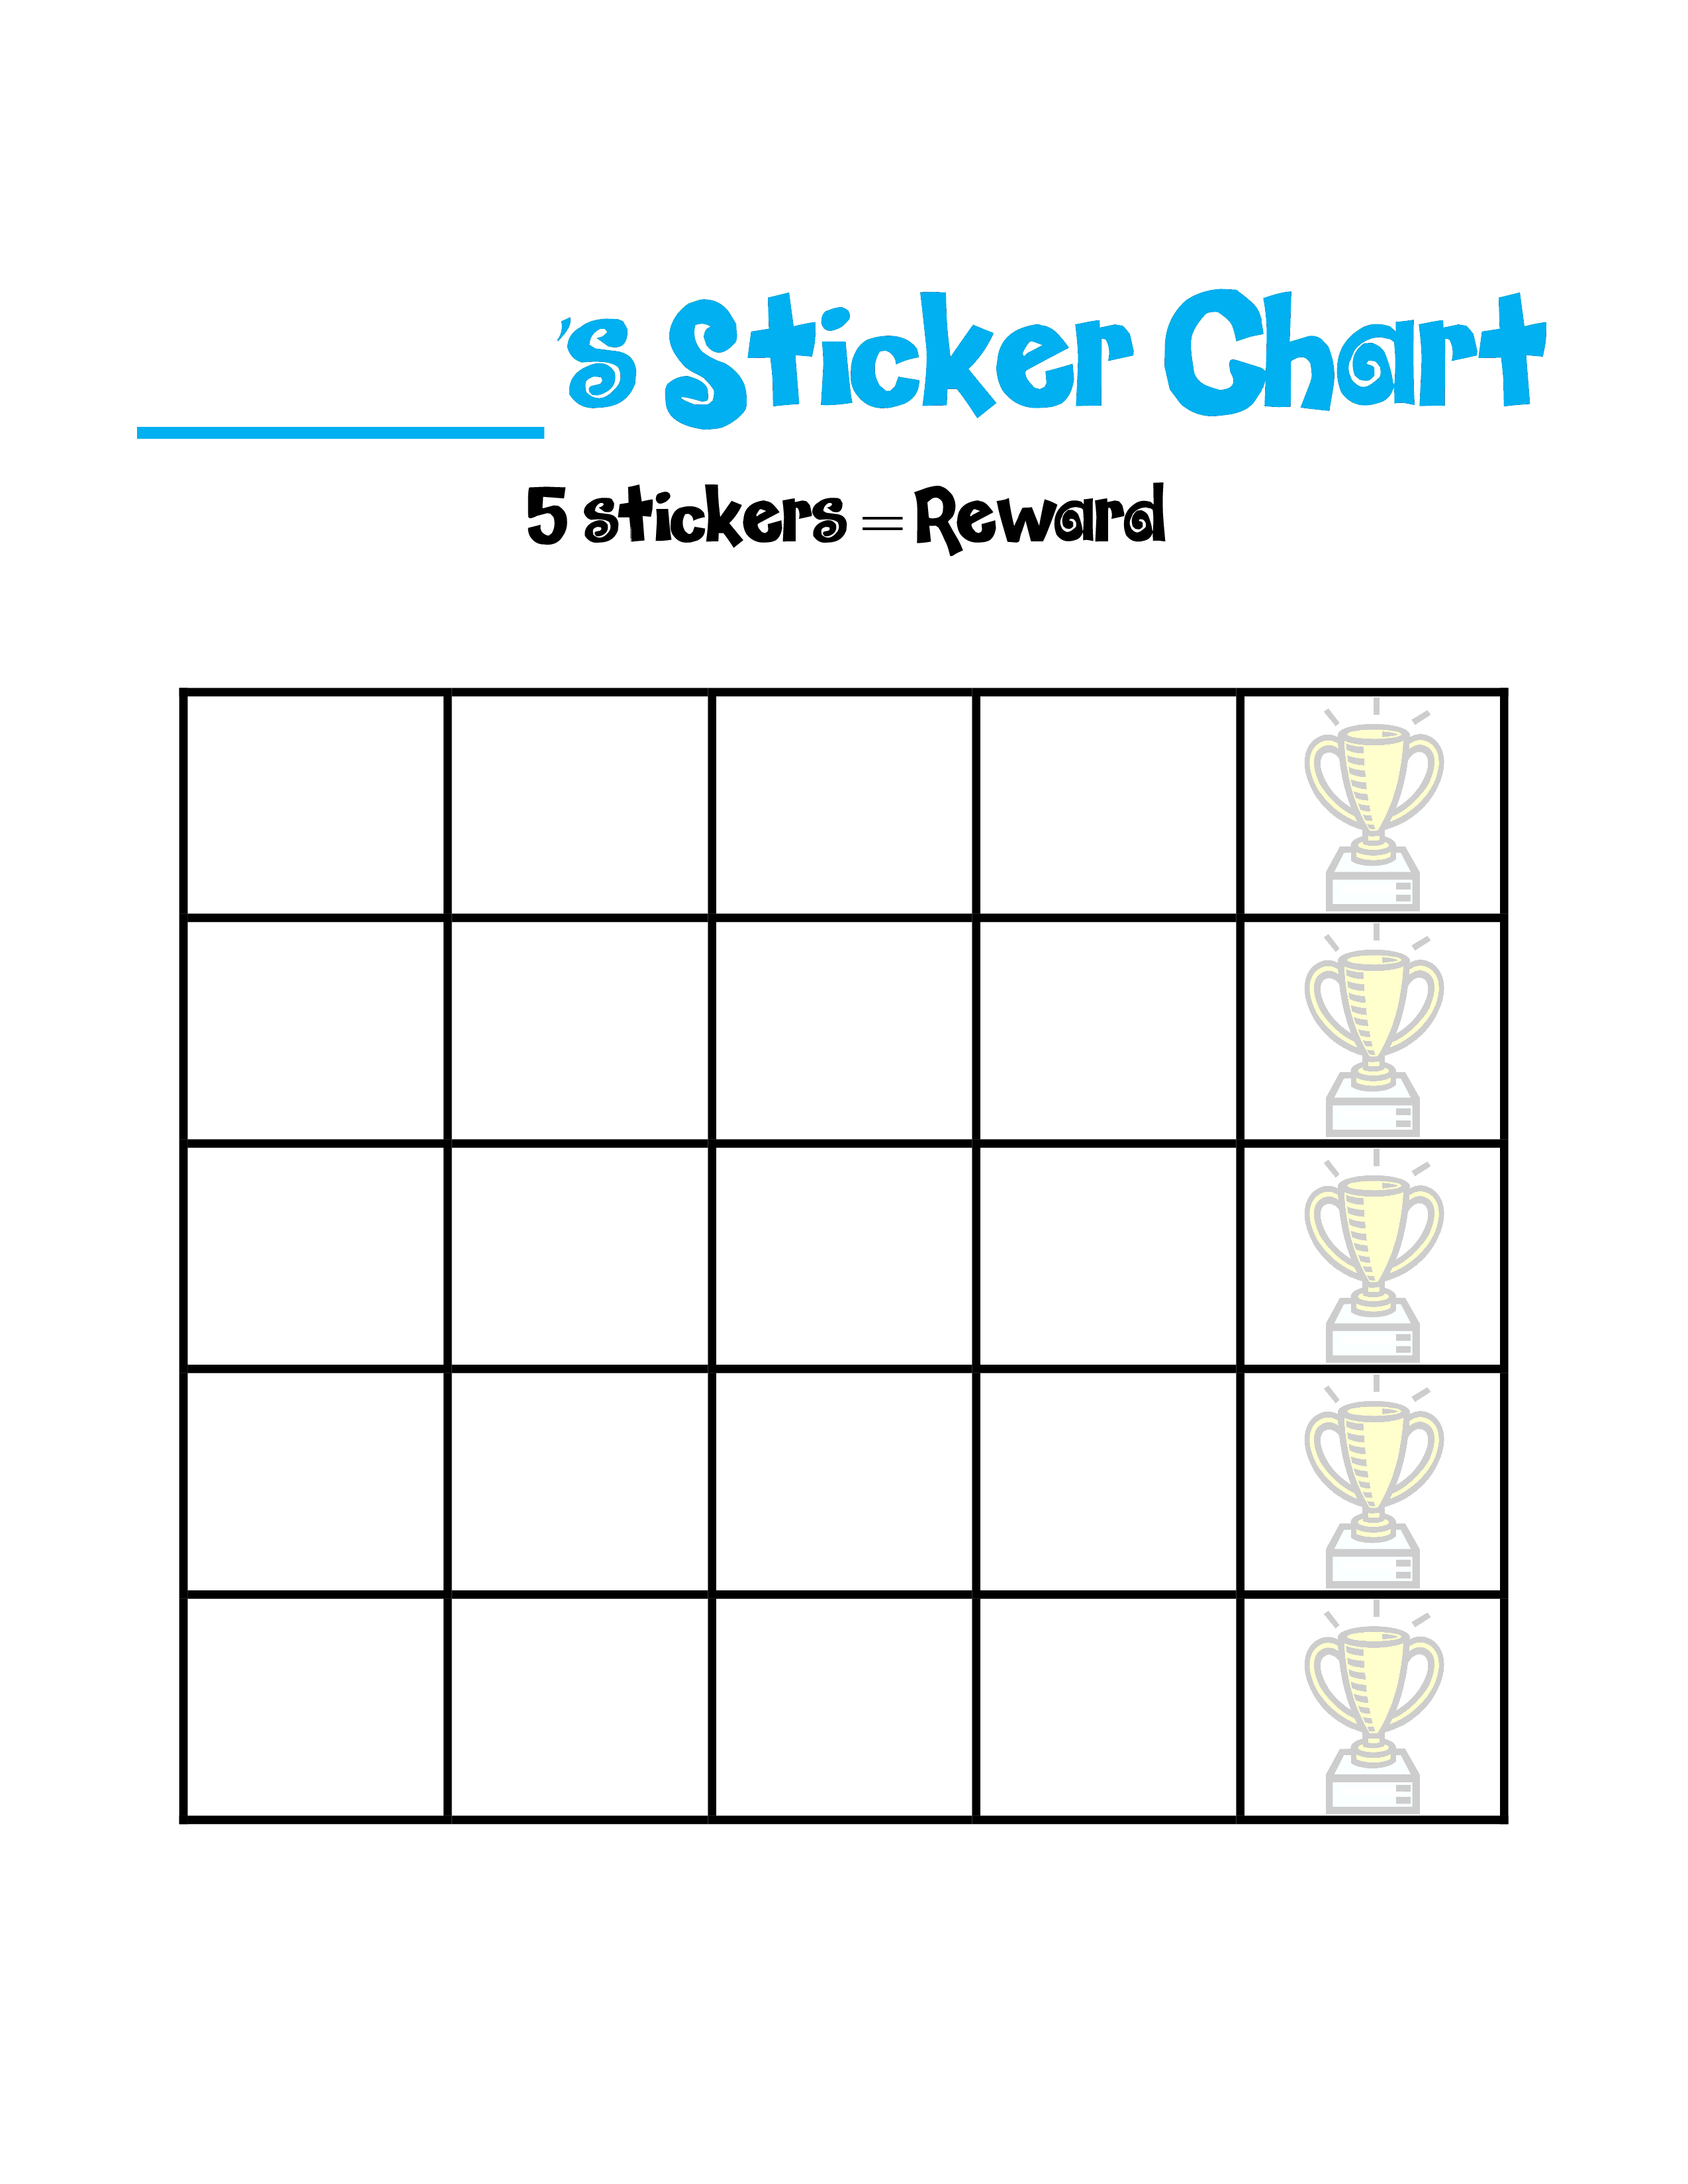 Blank Sticker Chart Templates At Allbusinesstemplates